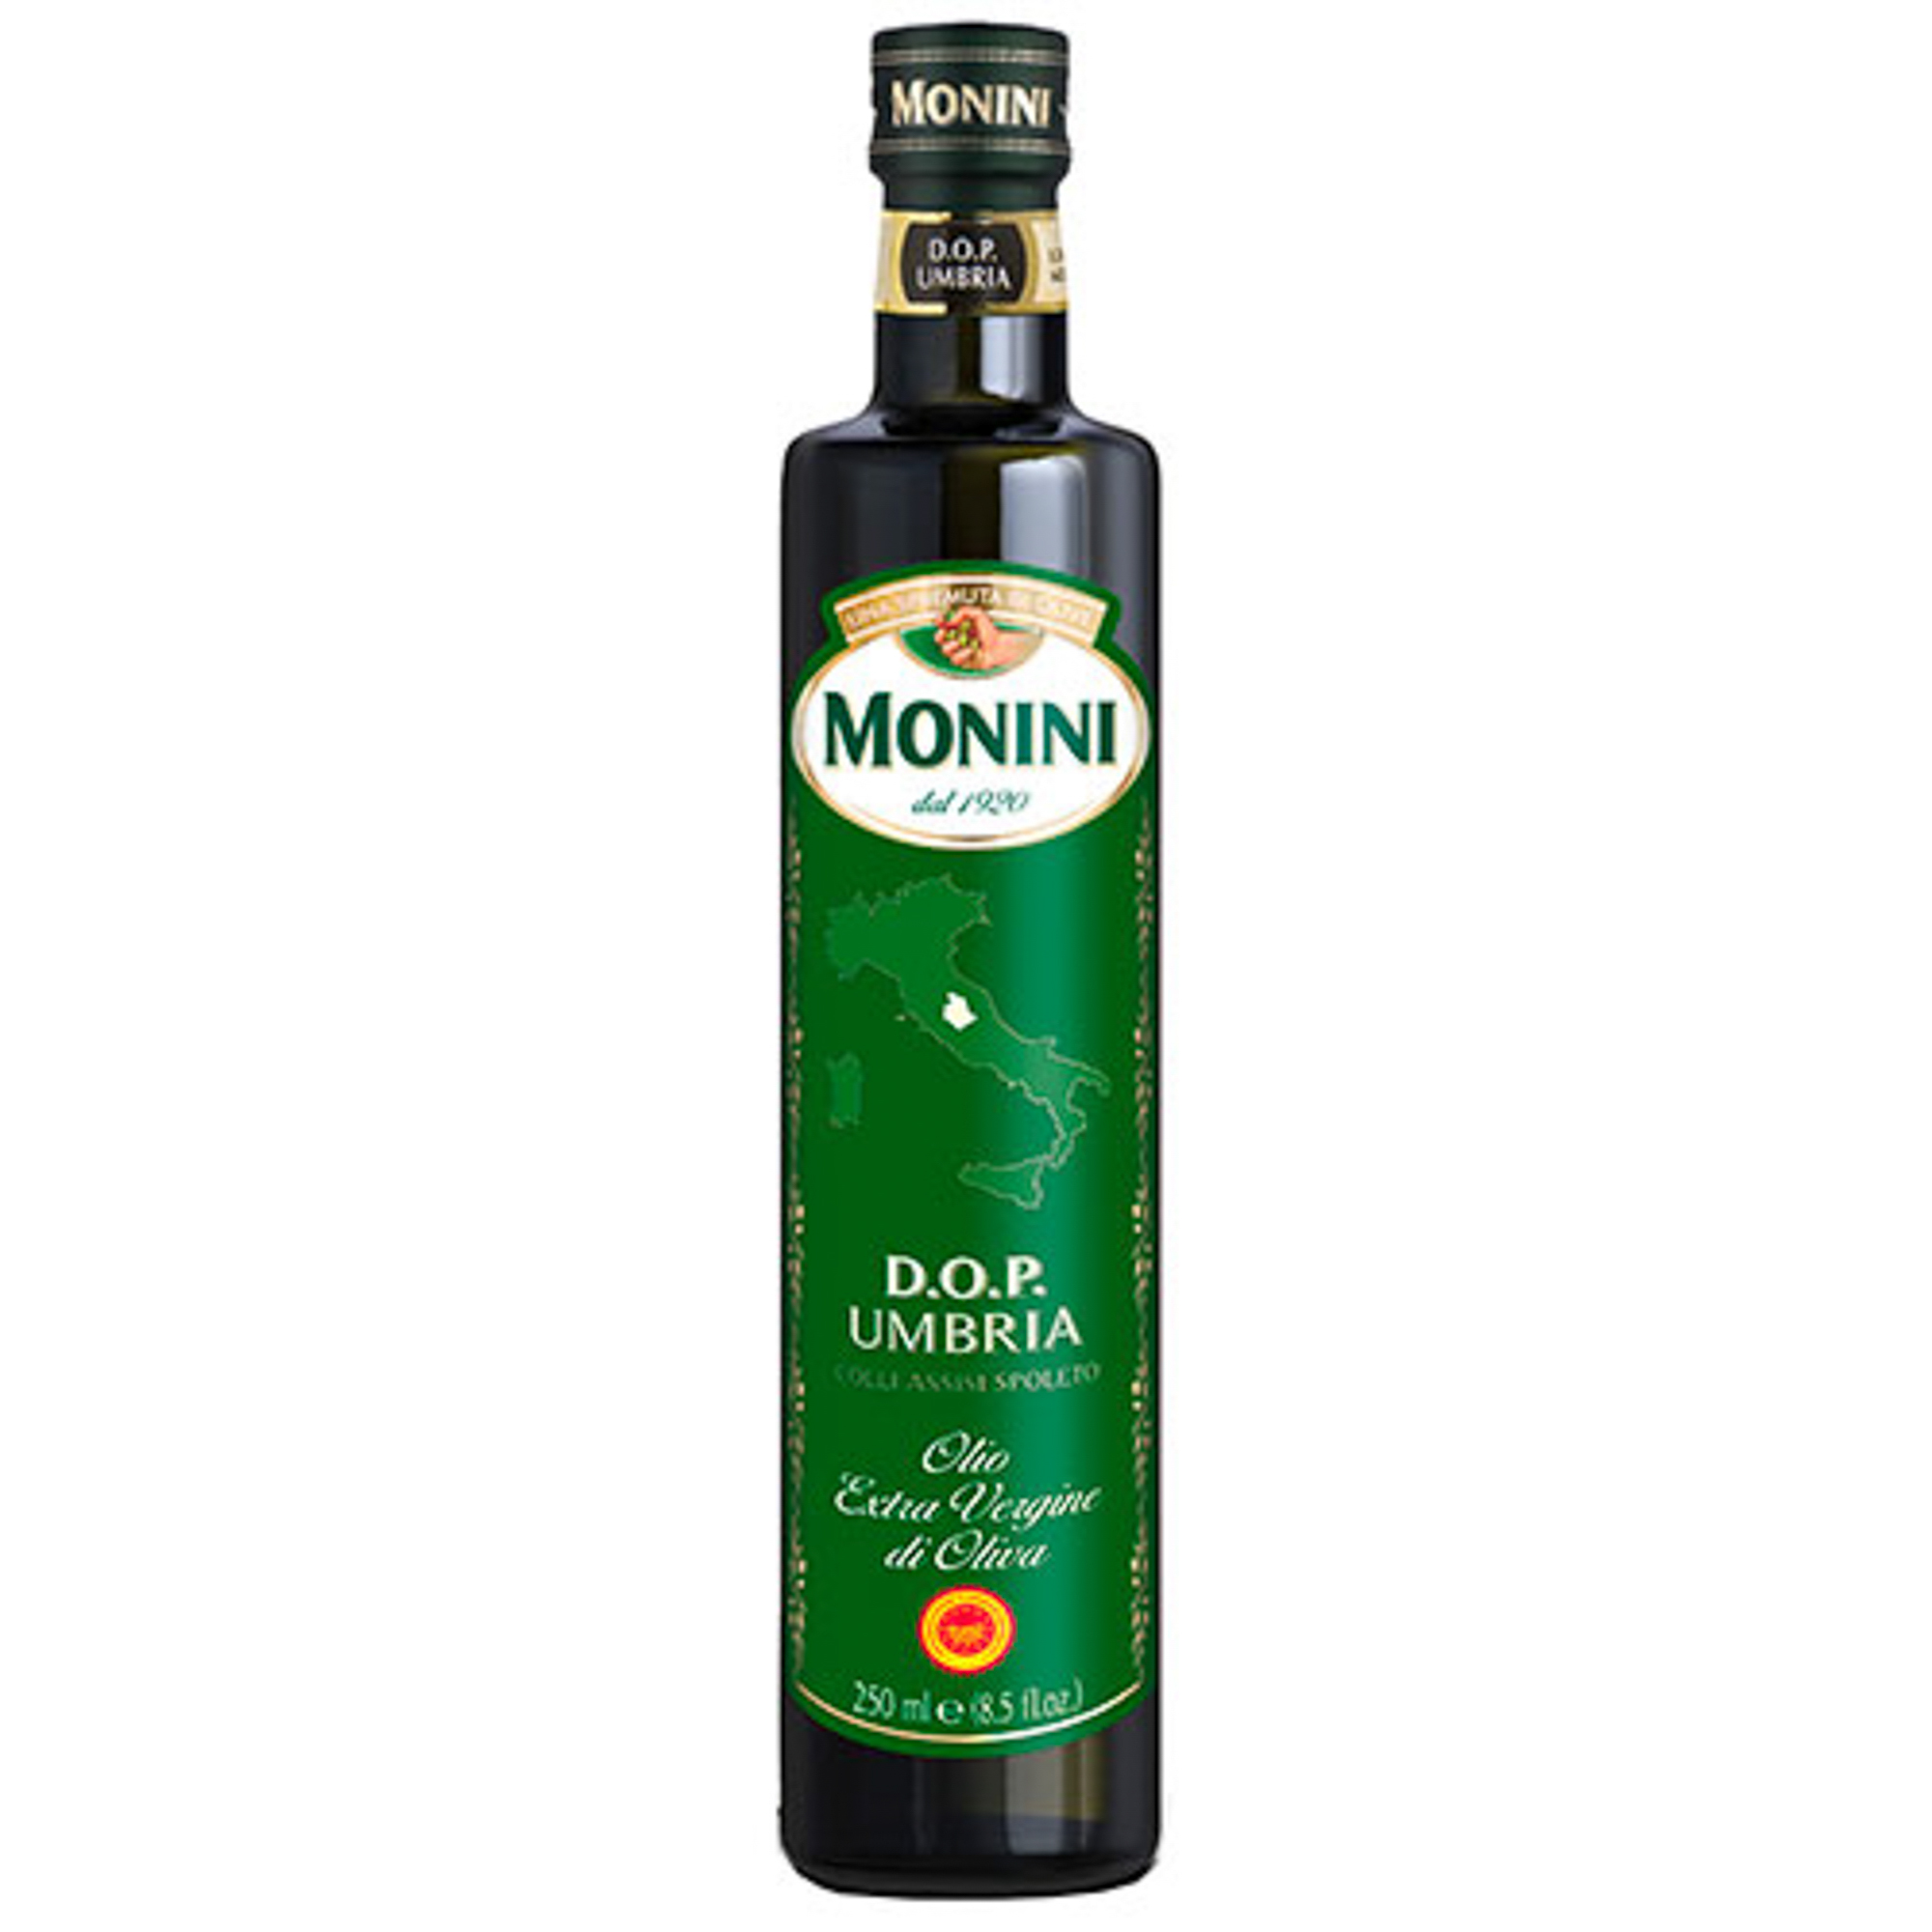 Оливковое масло для детей. Monini Extra Virgin d.o.p.. Масло Monini оливковое 250 мл. ITLV оливковое масло Extra Virgen 1л. Масло оливковое Монини Экстра Верджин розмарин 0,25л (6шт).